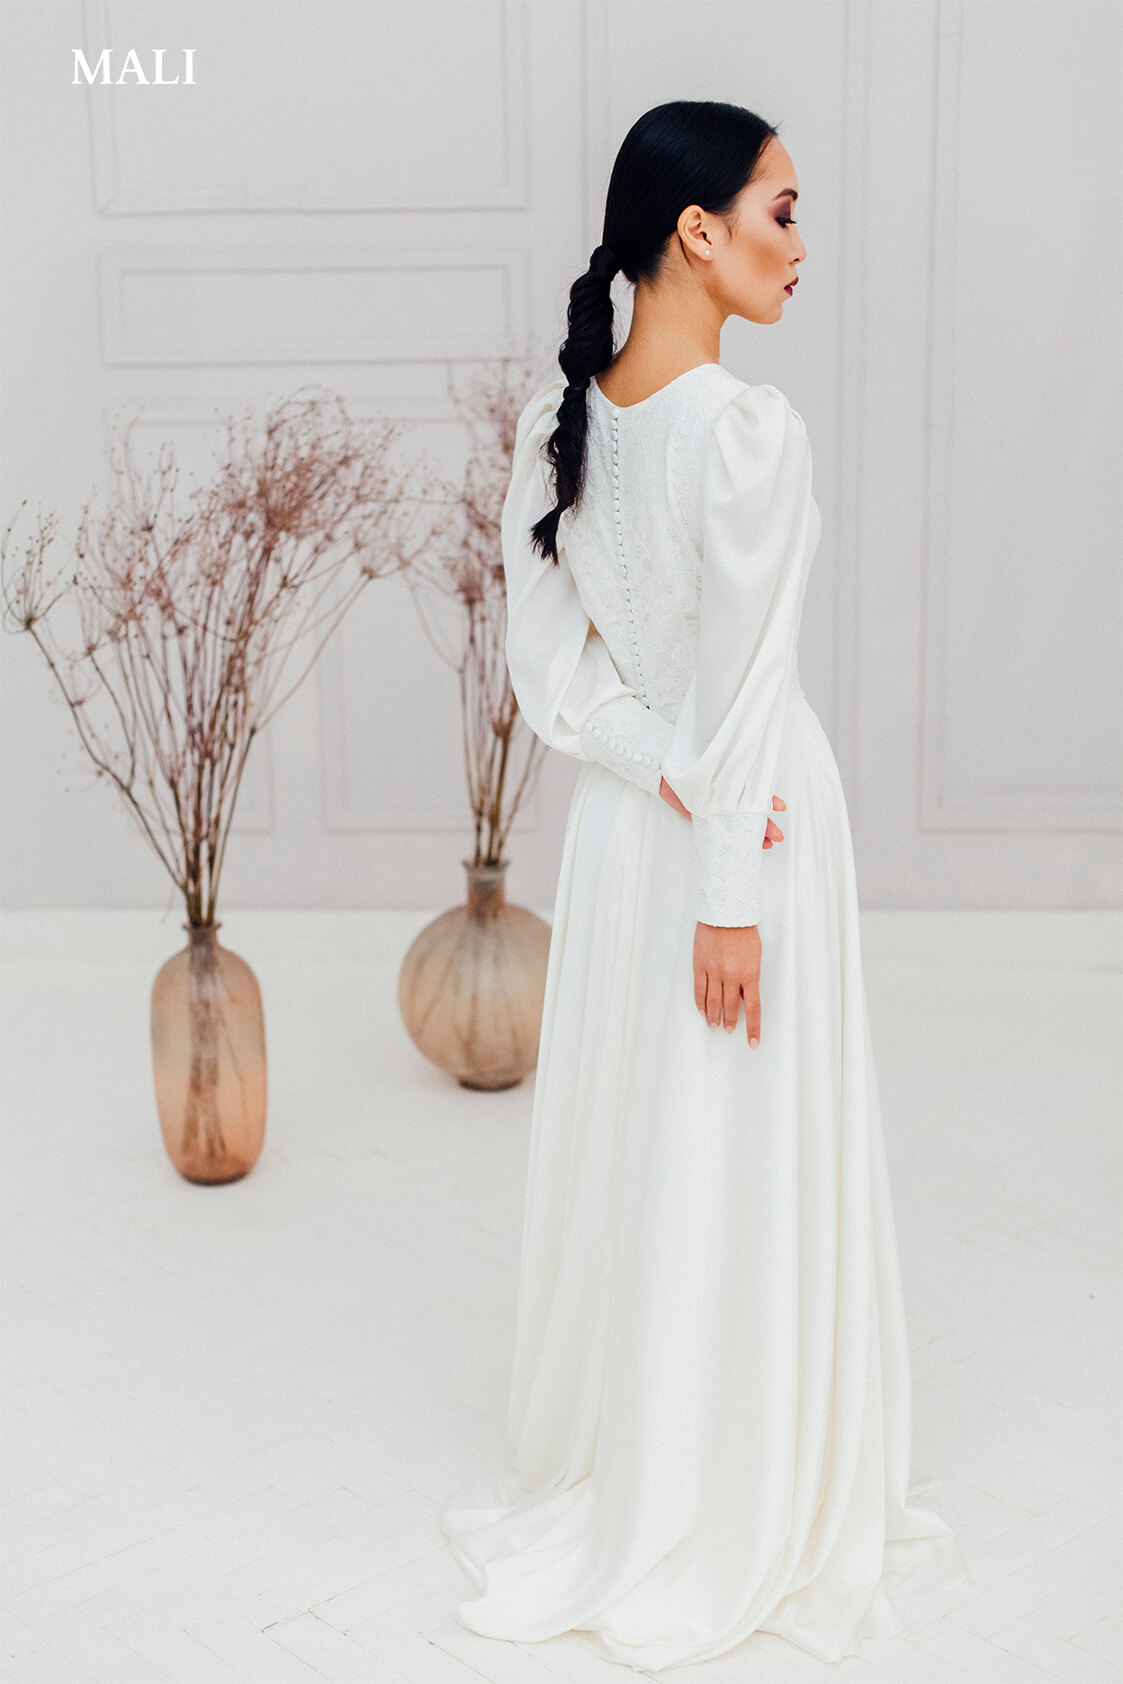 MALI - wedding dress "Refined Elegance" collection